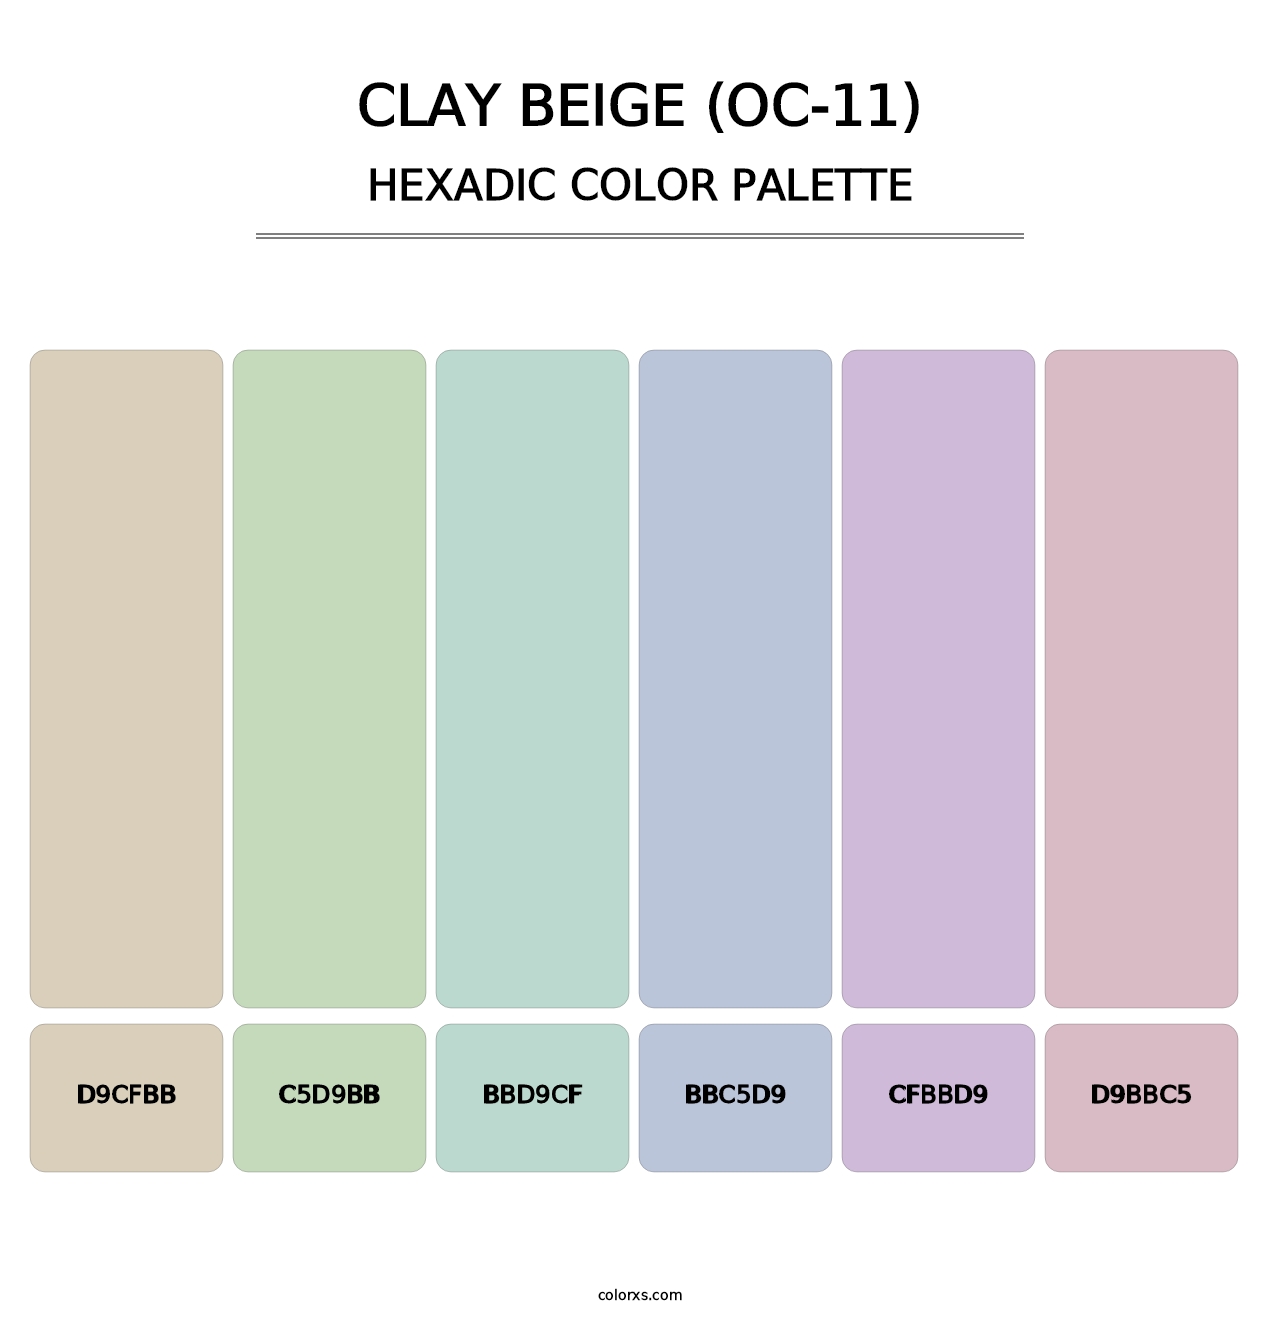 Clay Beige (OC-11) - Hexadic Color Palette